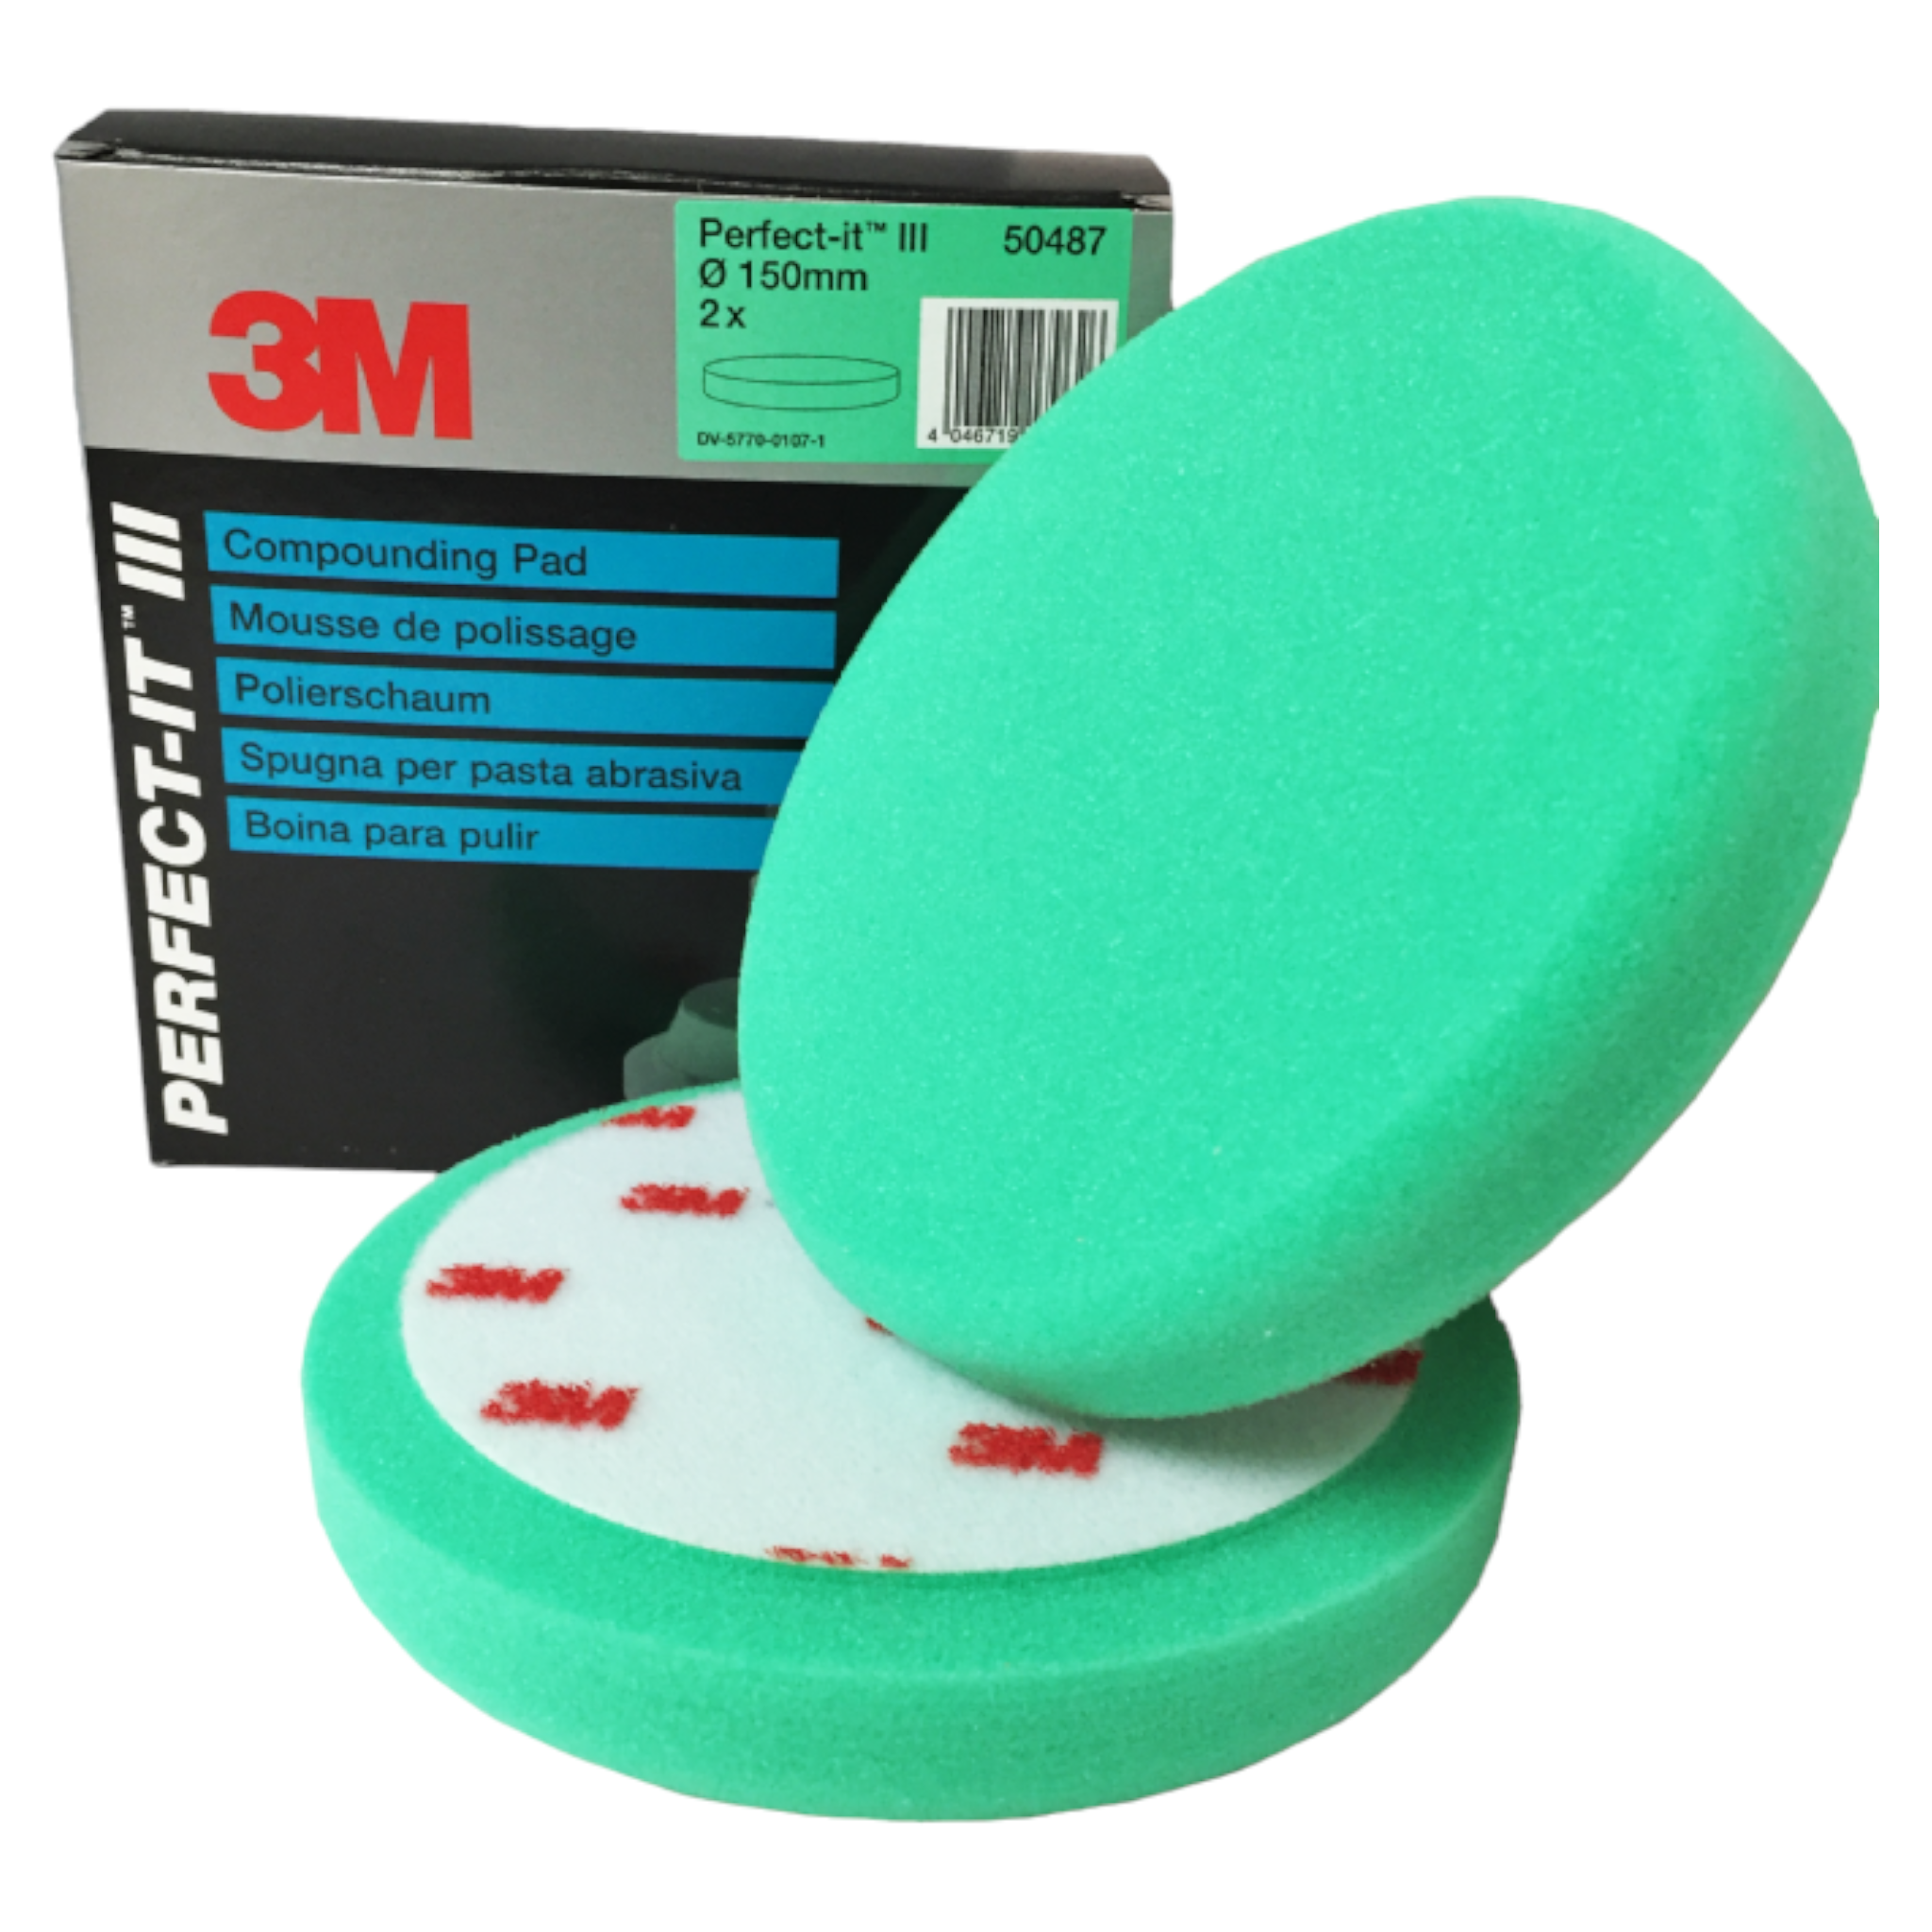 3M Perfect-It III Green Foam Compound Pad 150mm